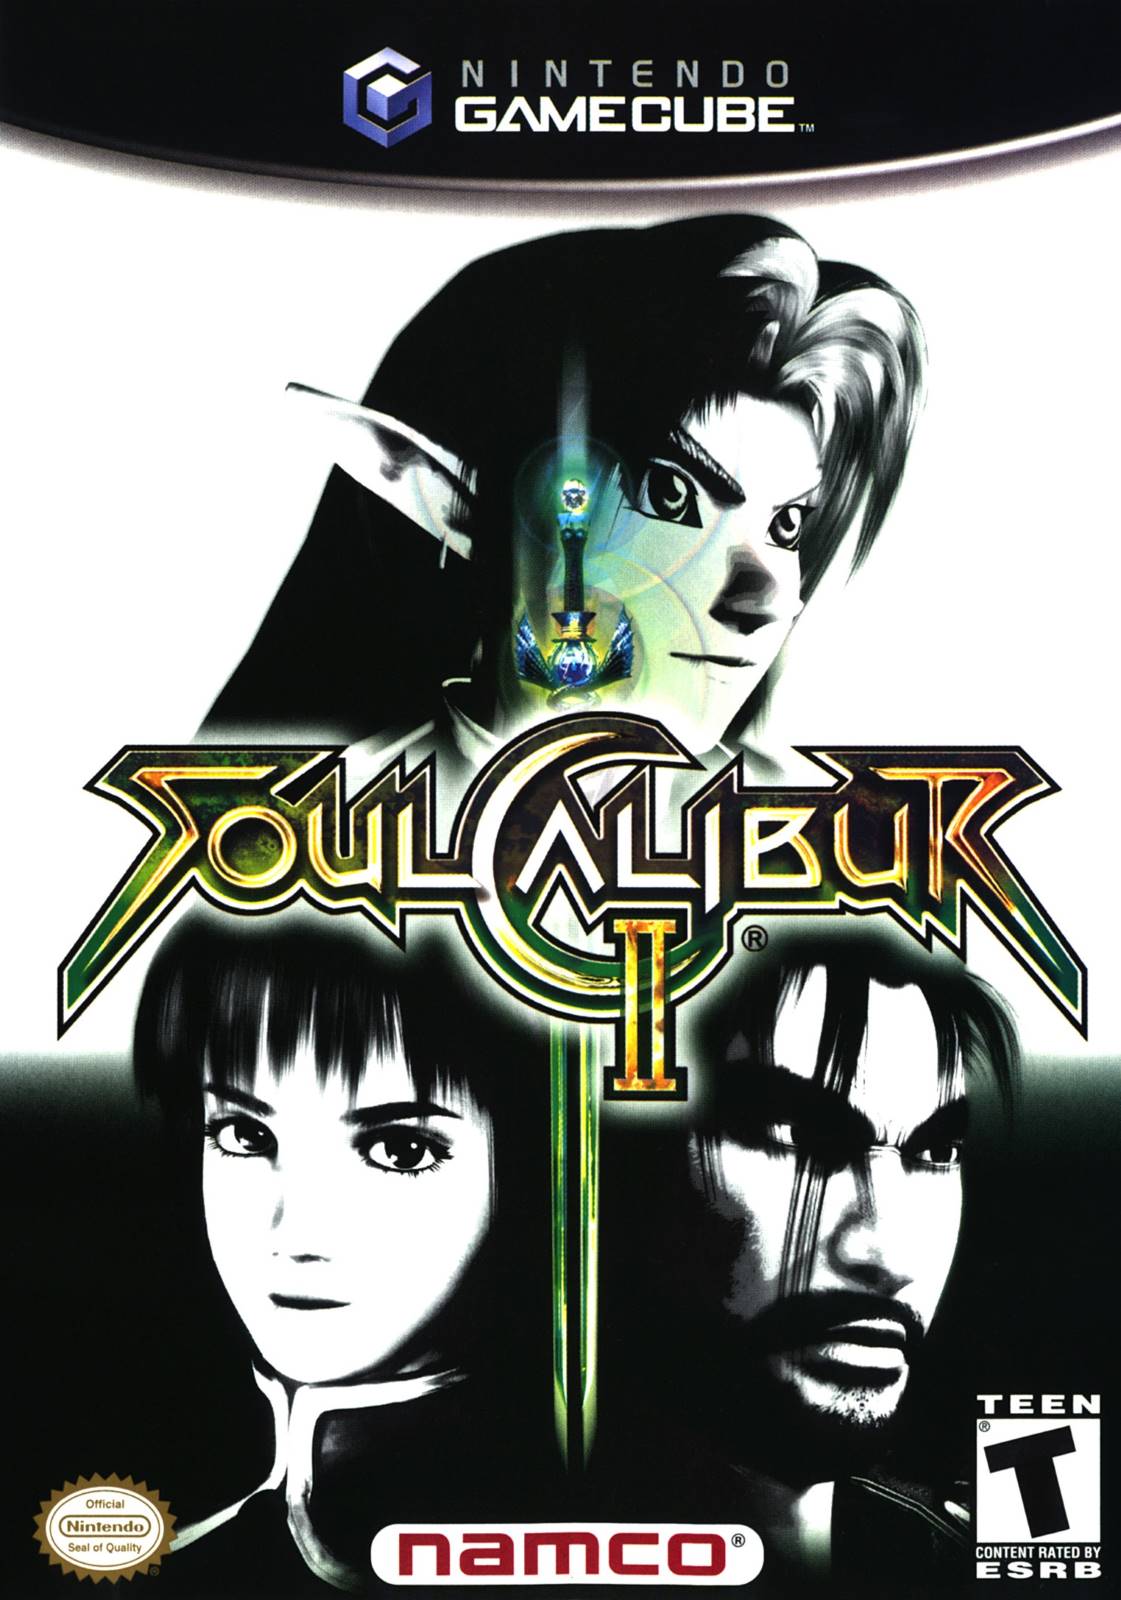 SoulCaliburII GameCube cover.jpg